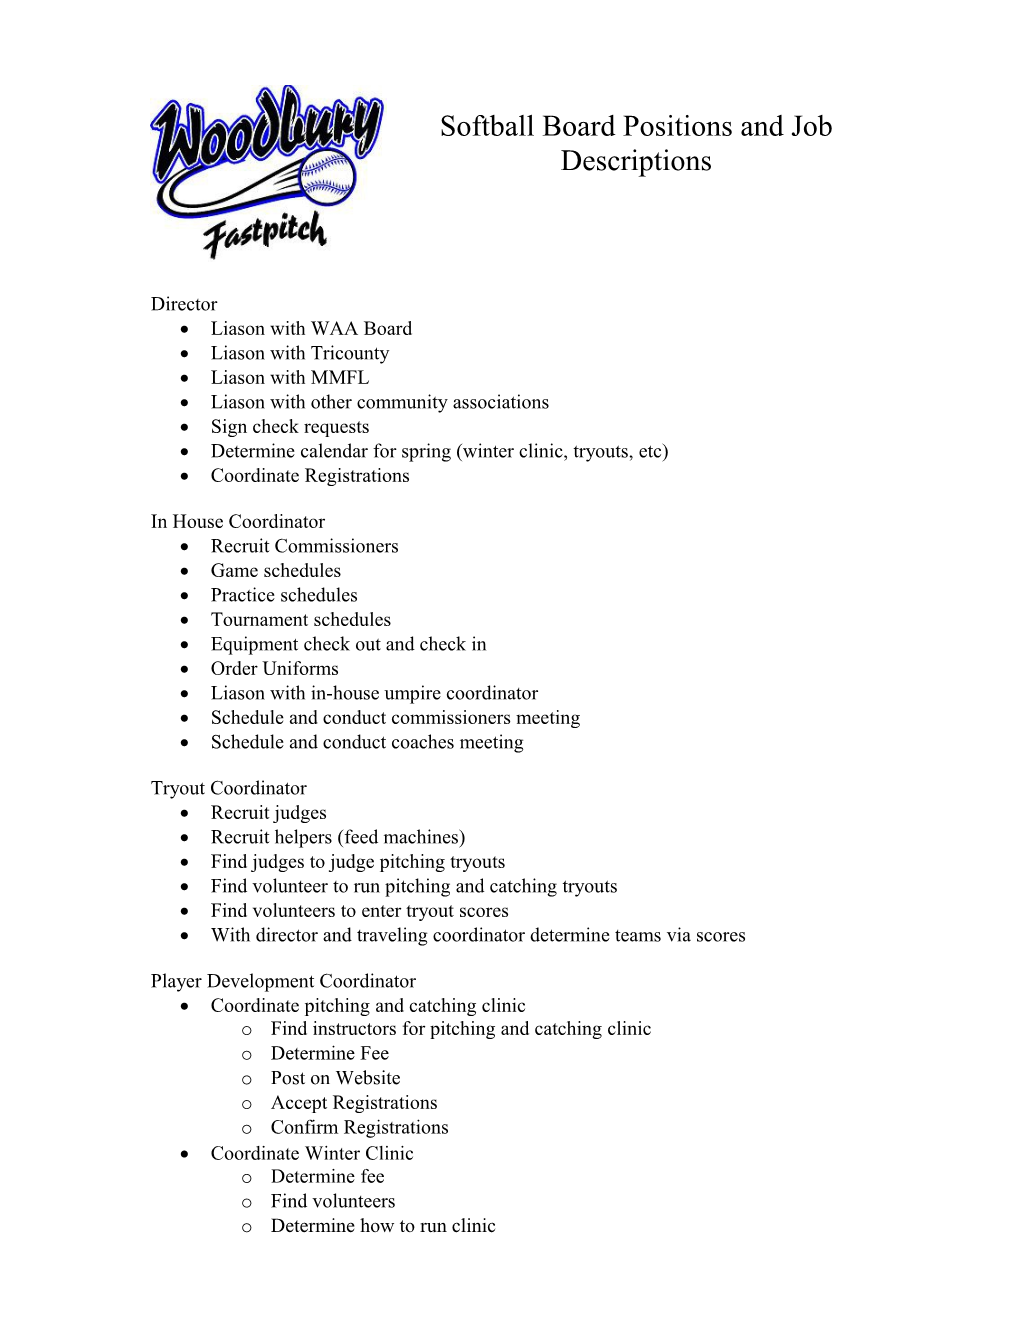 Softball Board Positions and Job Descriptions